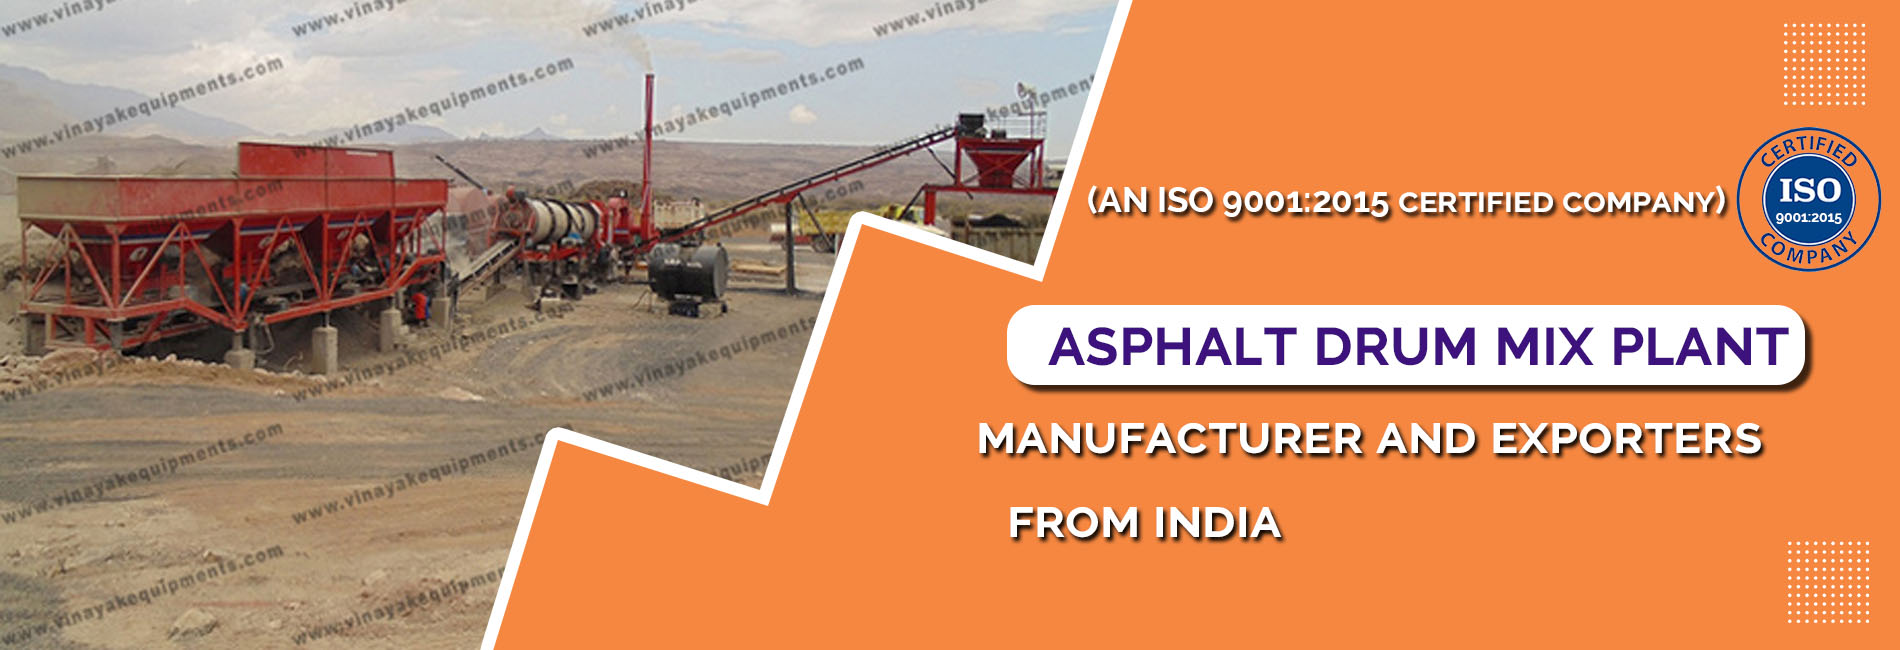 Asphalt Drum Mix Plant manufacturer and exporters from india, asfalto planta de mezcla por lotes